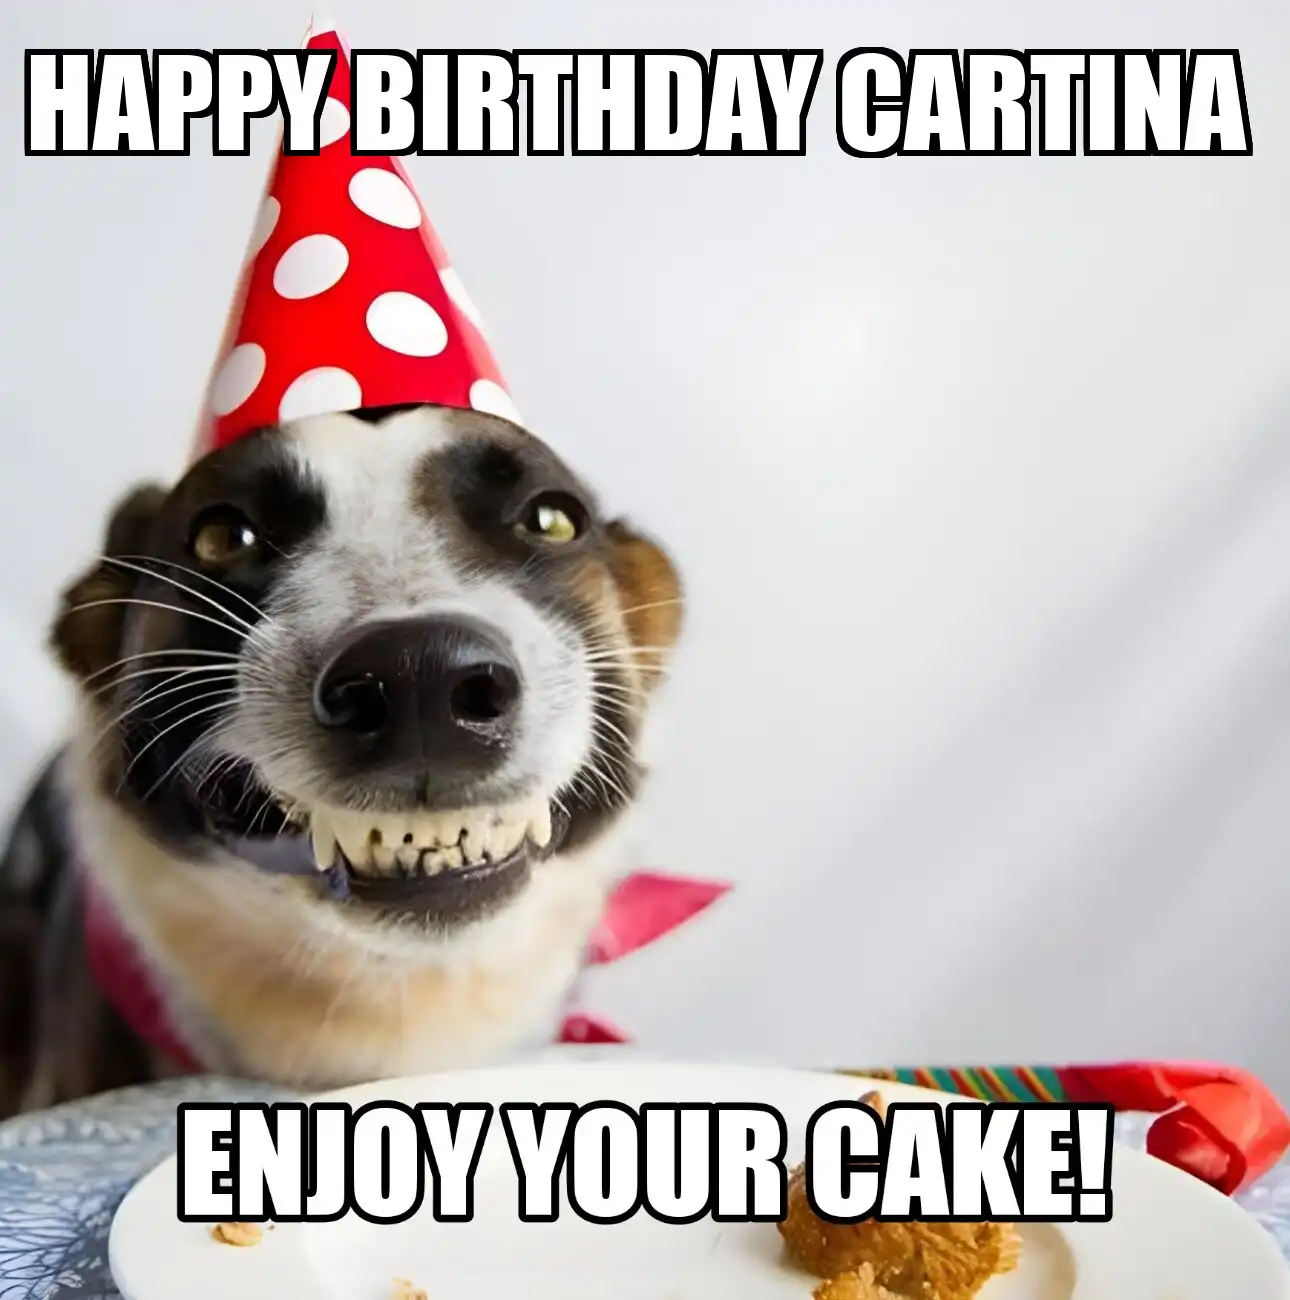 Happy Birthday Cartina Enjoy Your Cake Dog Meme